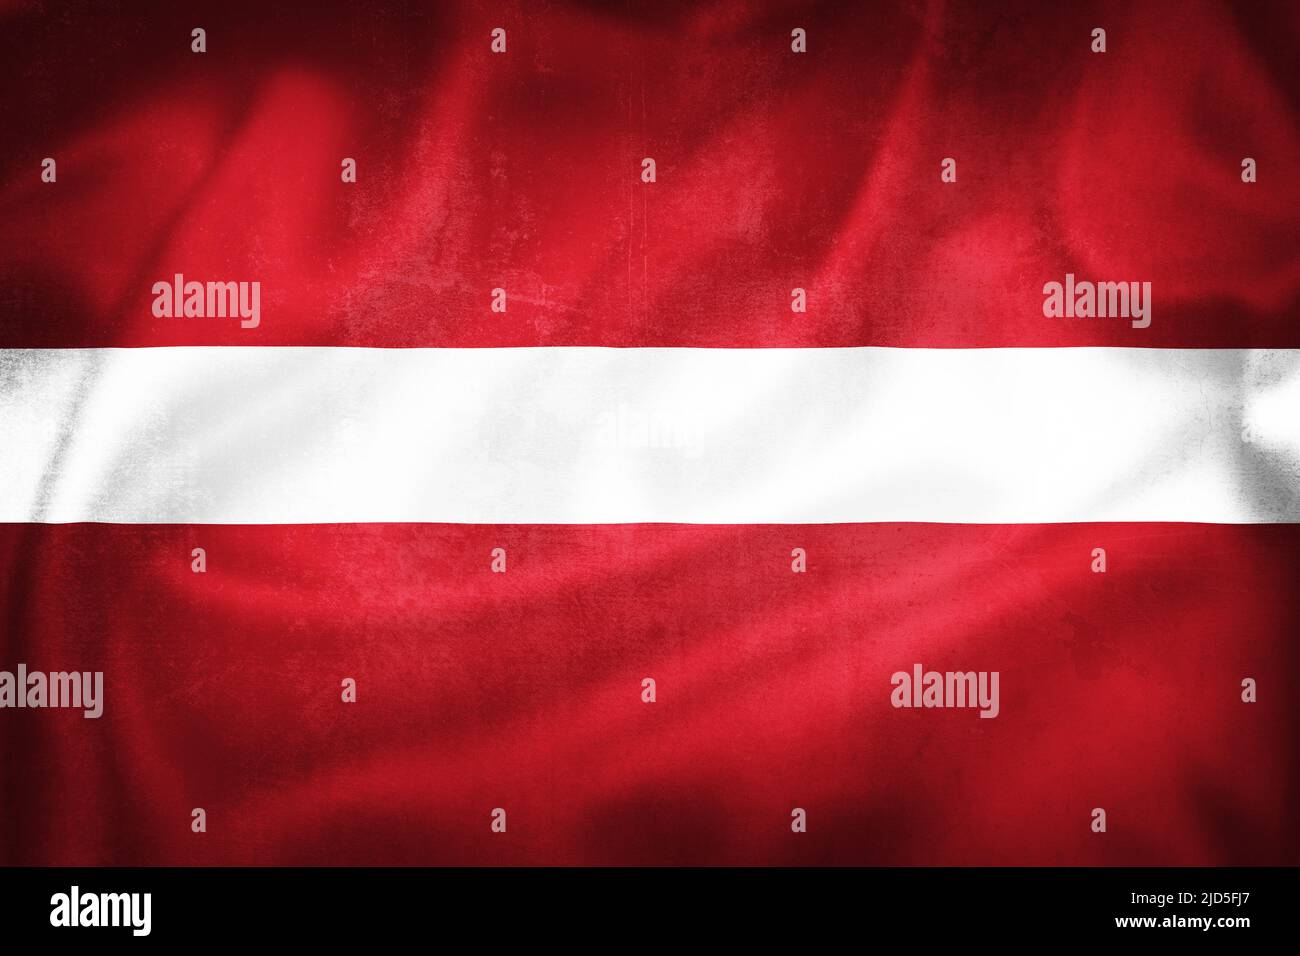 Grunge 3D illustration of Latvia flag, concept of Latvia Stock Photo